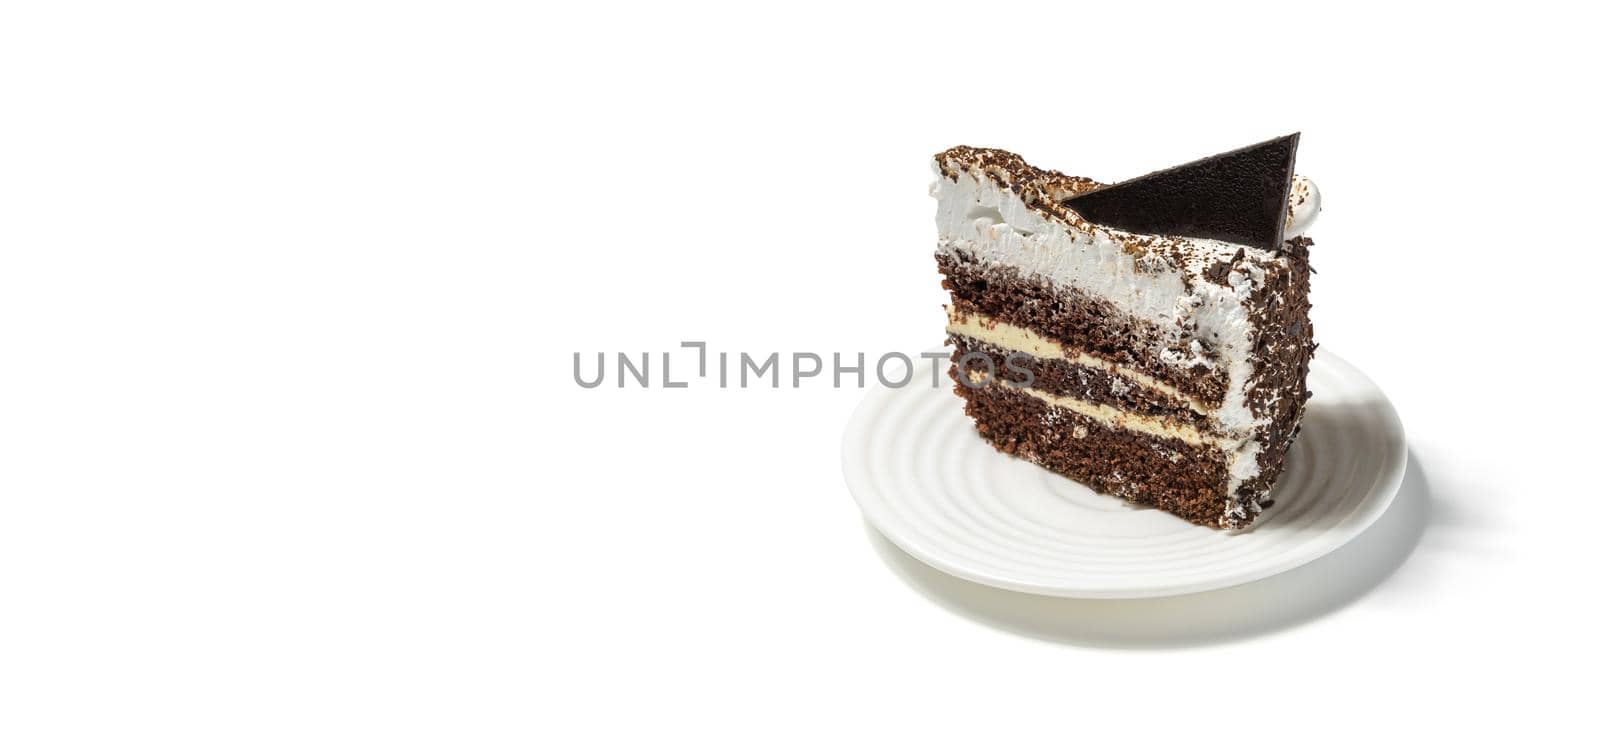 Tasty chocolate cake on a white plate over white background banner format by karpovkottt